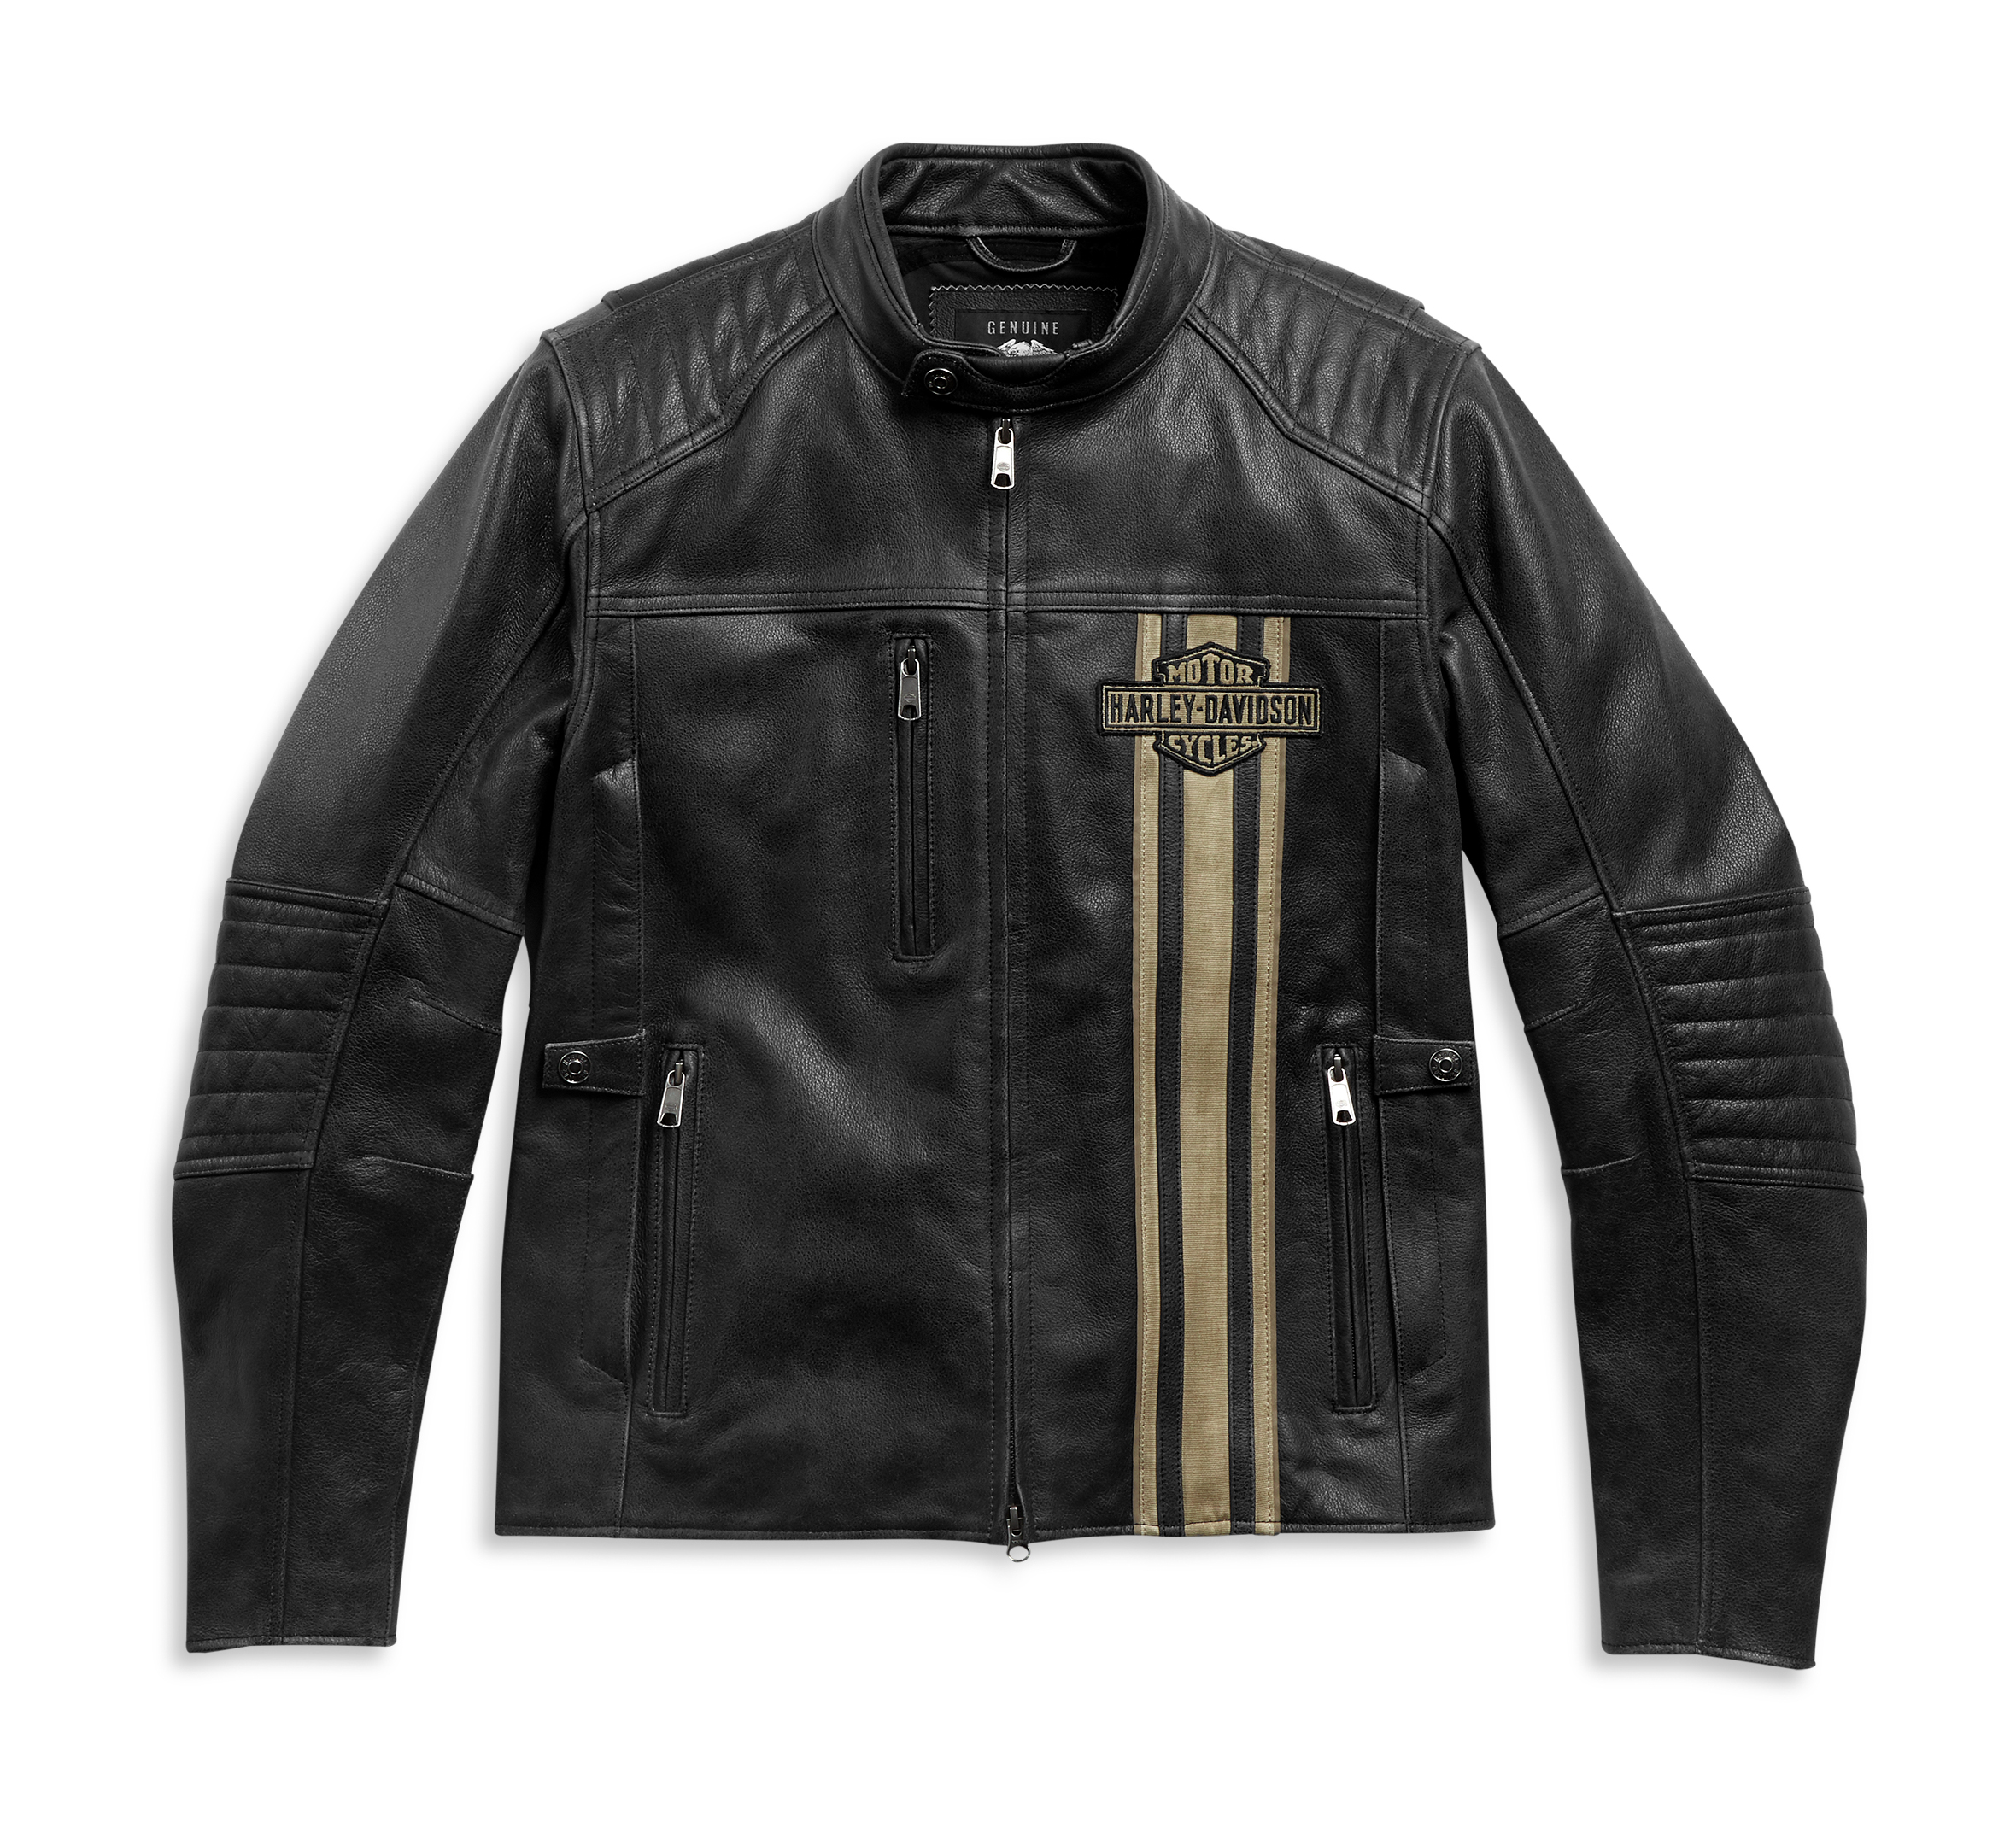 schwarz in schwarz 👍or👎??? #thursdays #allblack #ootd #streetstyles  #menswears | Mens outfits, Leather jacket outfit men, Leather jacket outfits